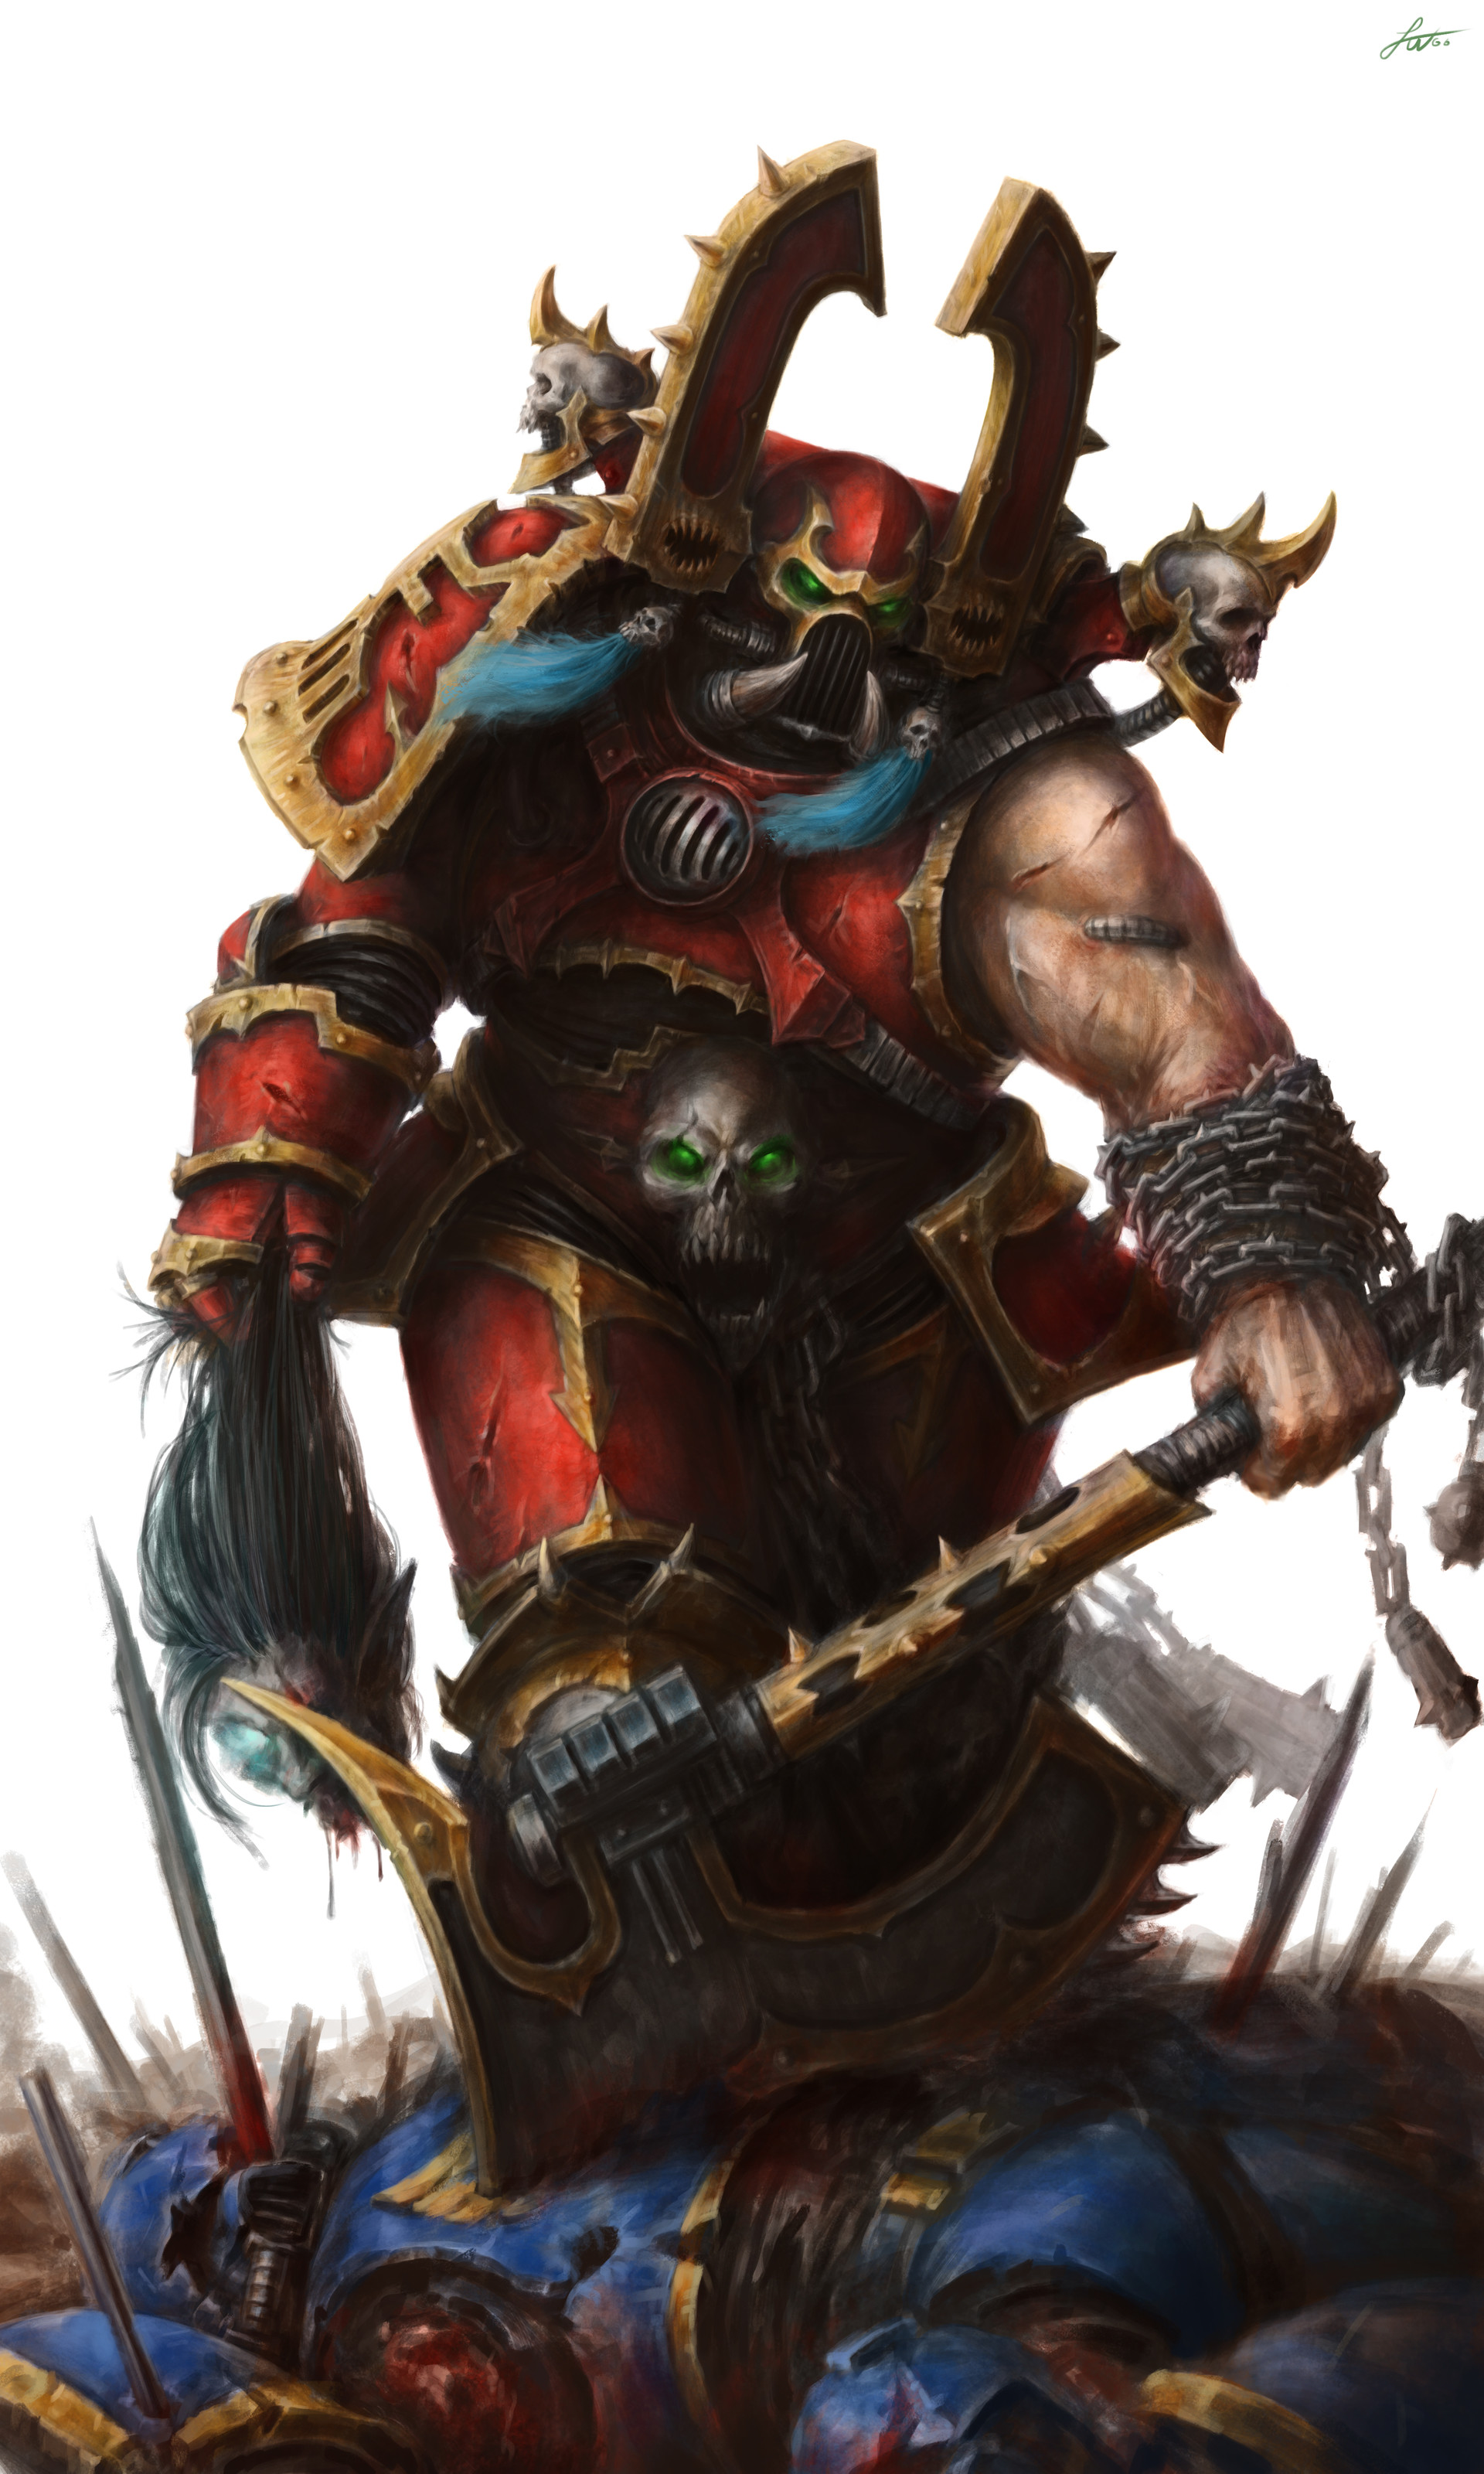 Khârn the Betrayer: The Bloodthirsty Champion in Warhammer 40k